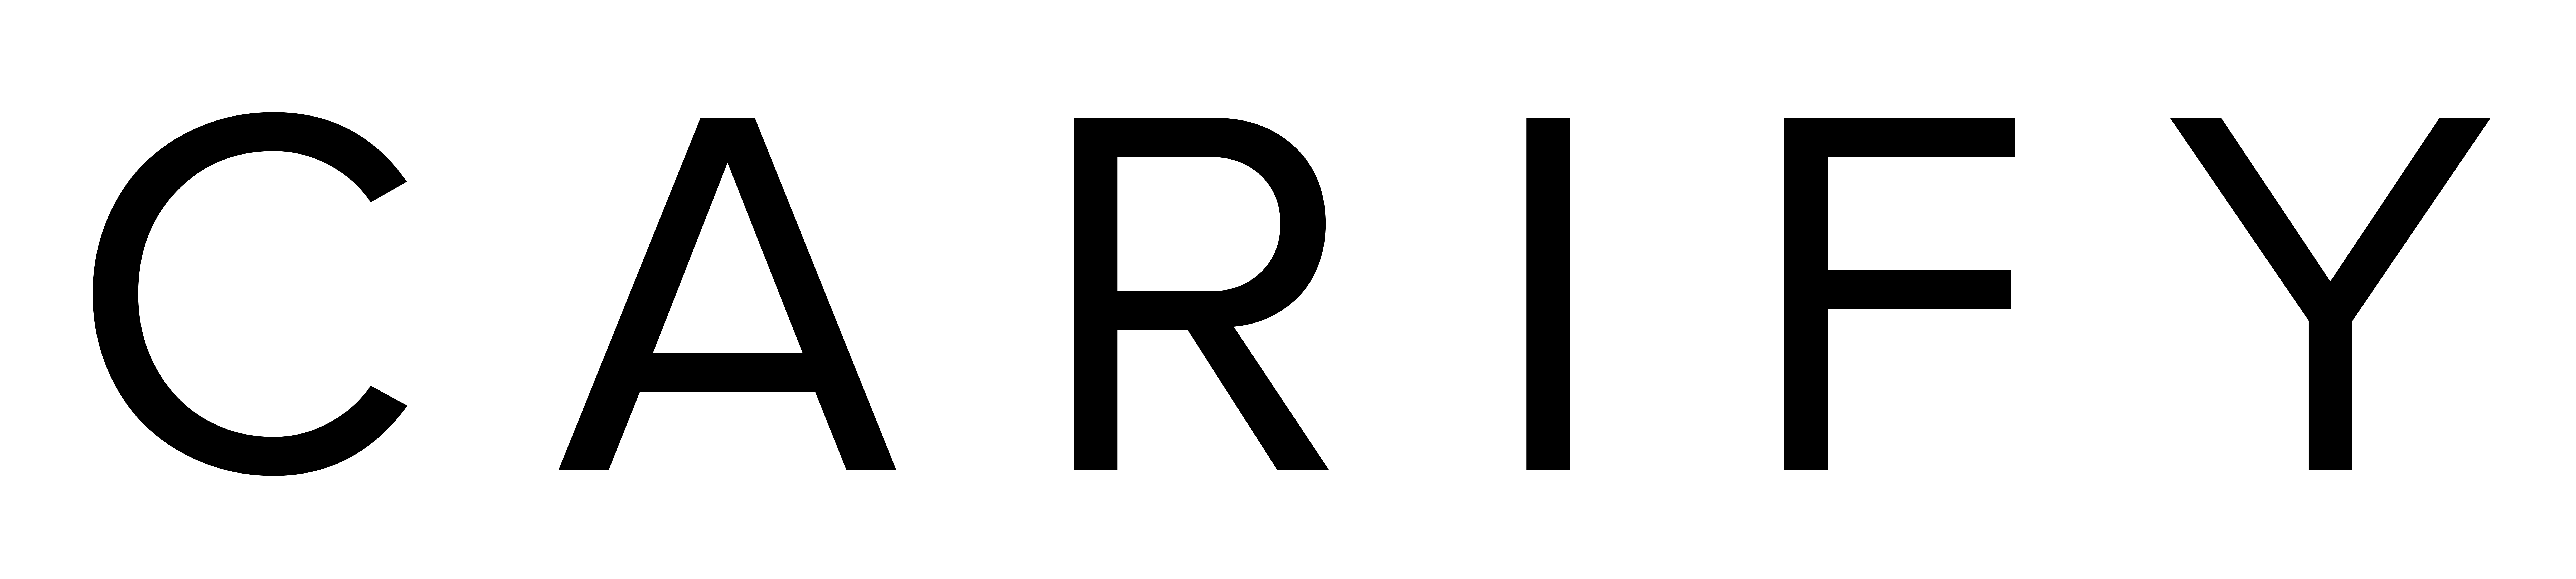 carify logo